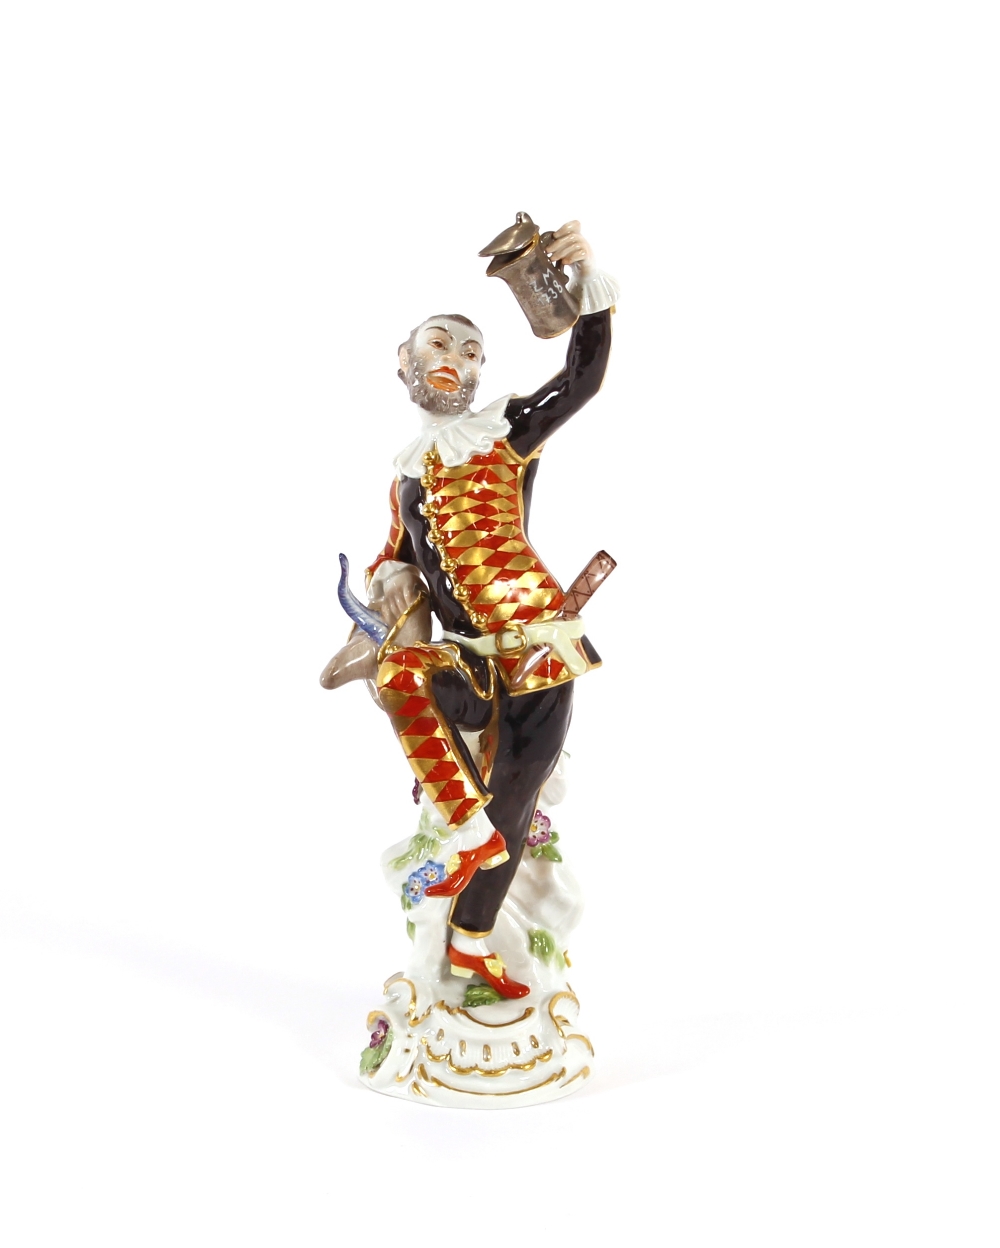 A Meissen harlequin figure, 23cm high